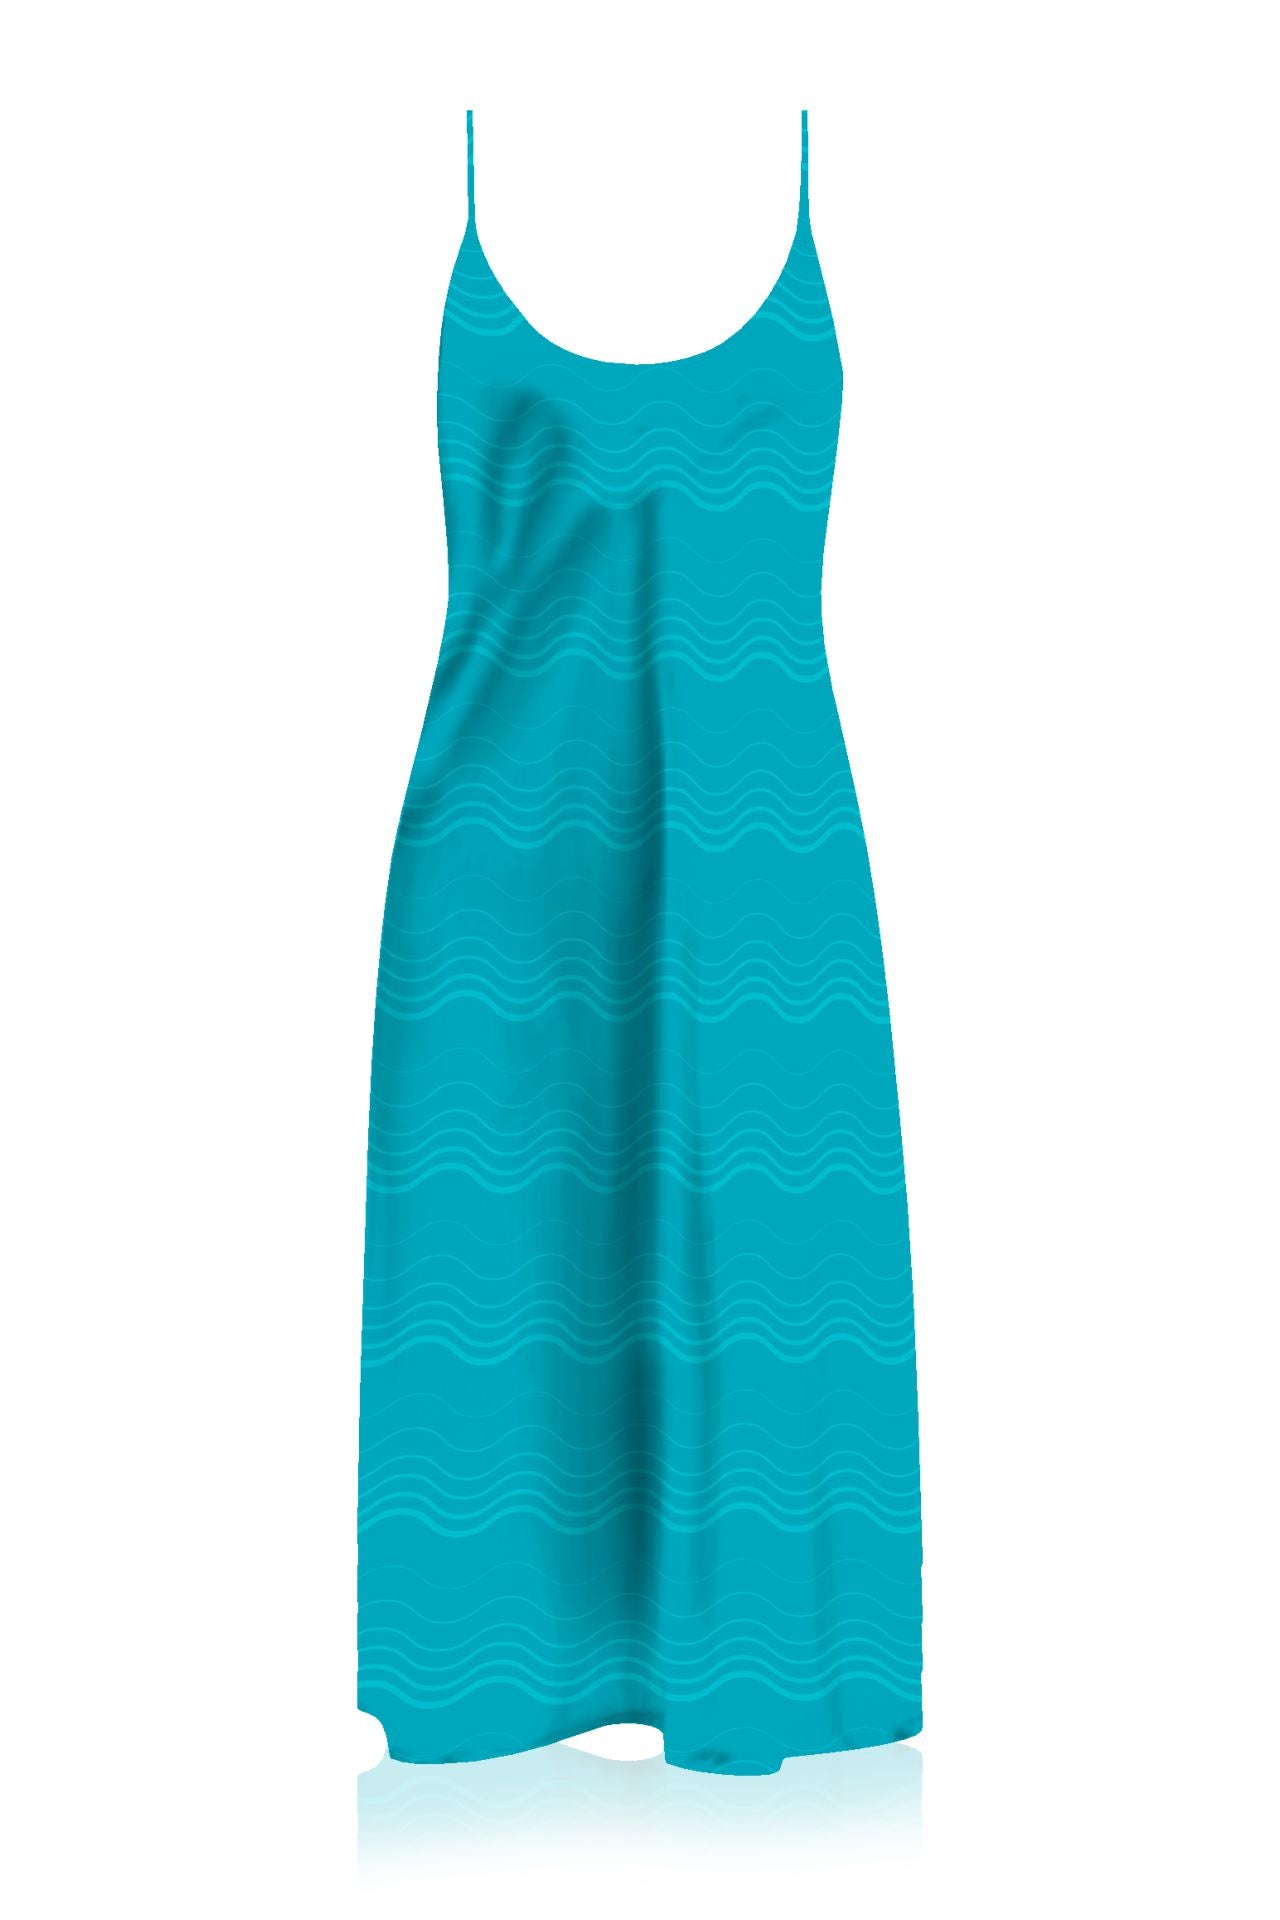 "cami bodycon midi dress "Kyle X Shahida" "cami midi slip dress" "printed camisole dress"